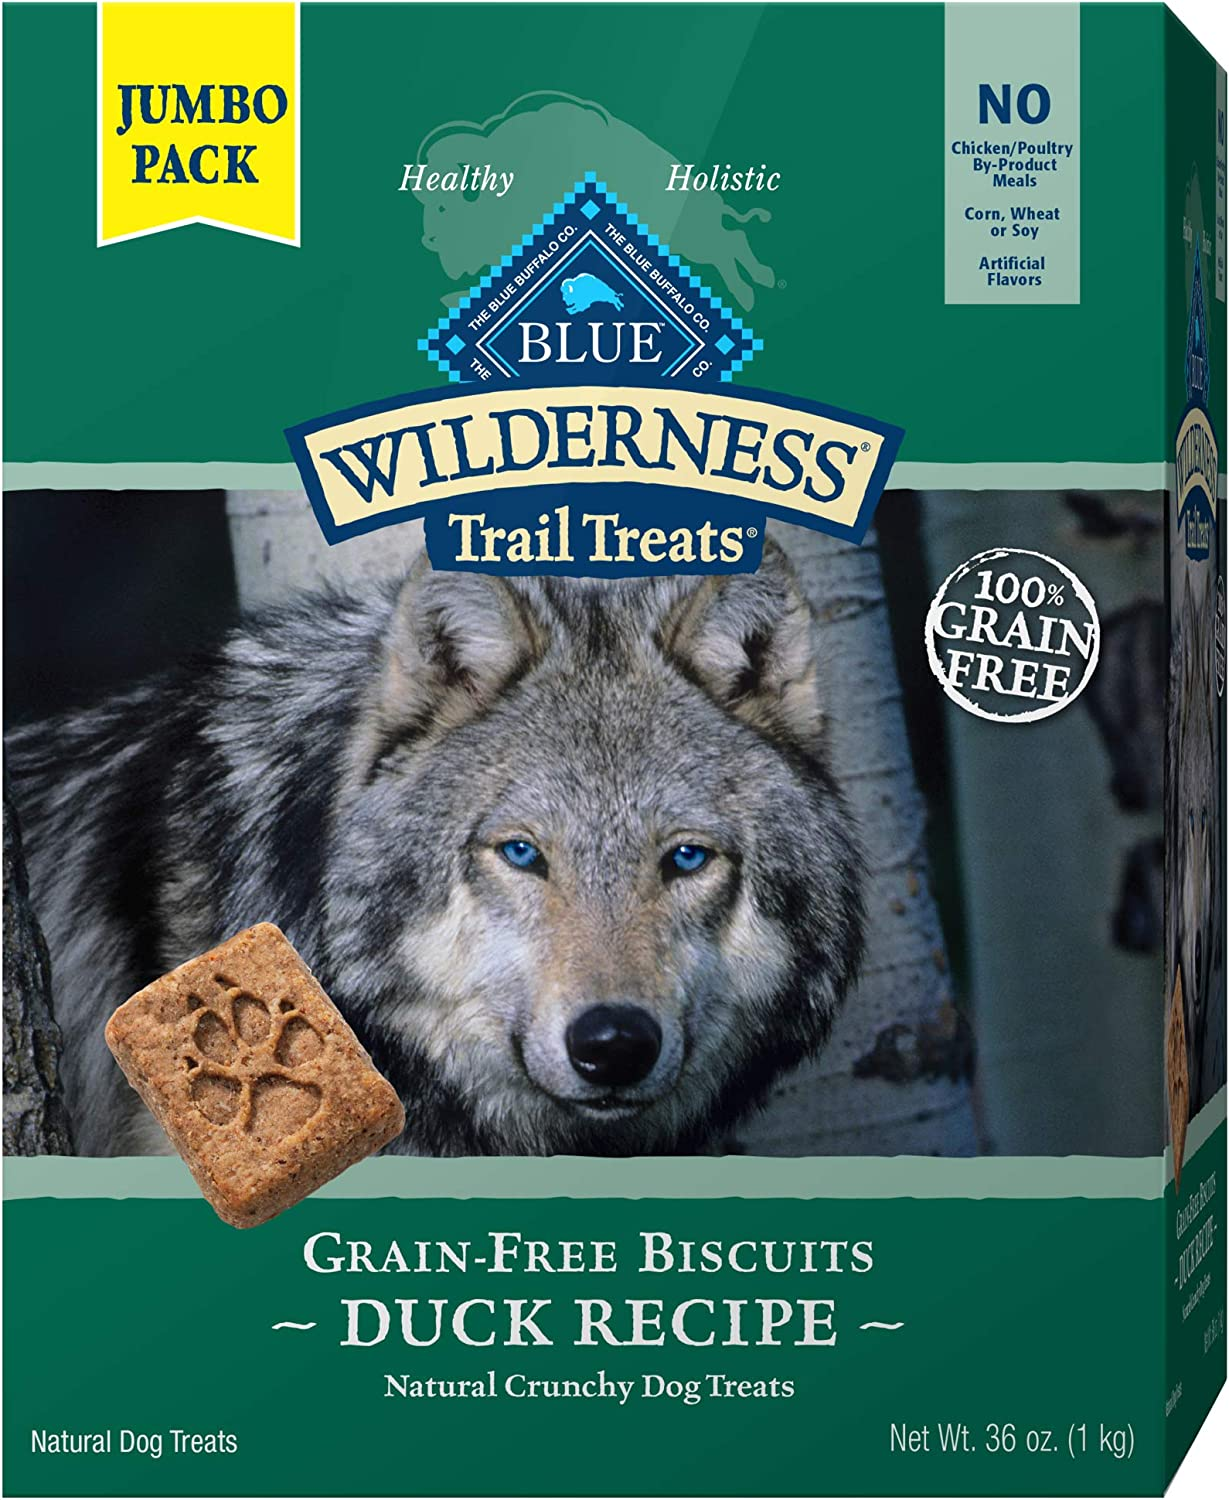 Wilderness Trail Treats Grain Free Biscuits Crunchy Dog Treats